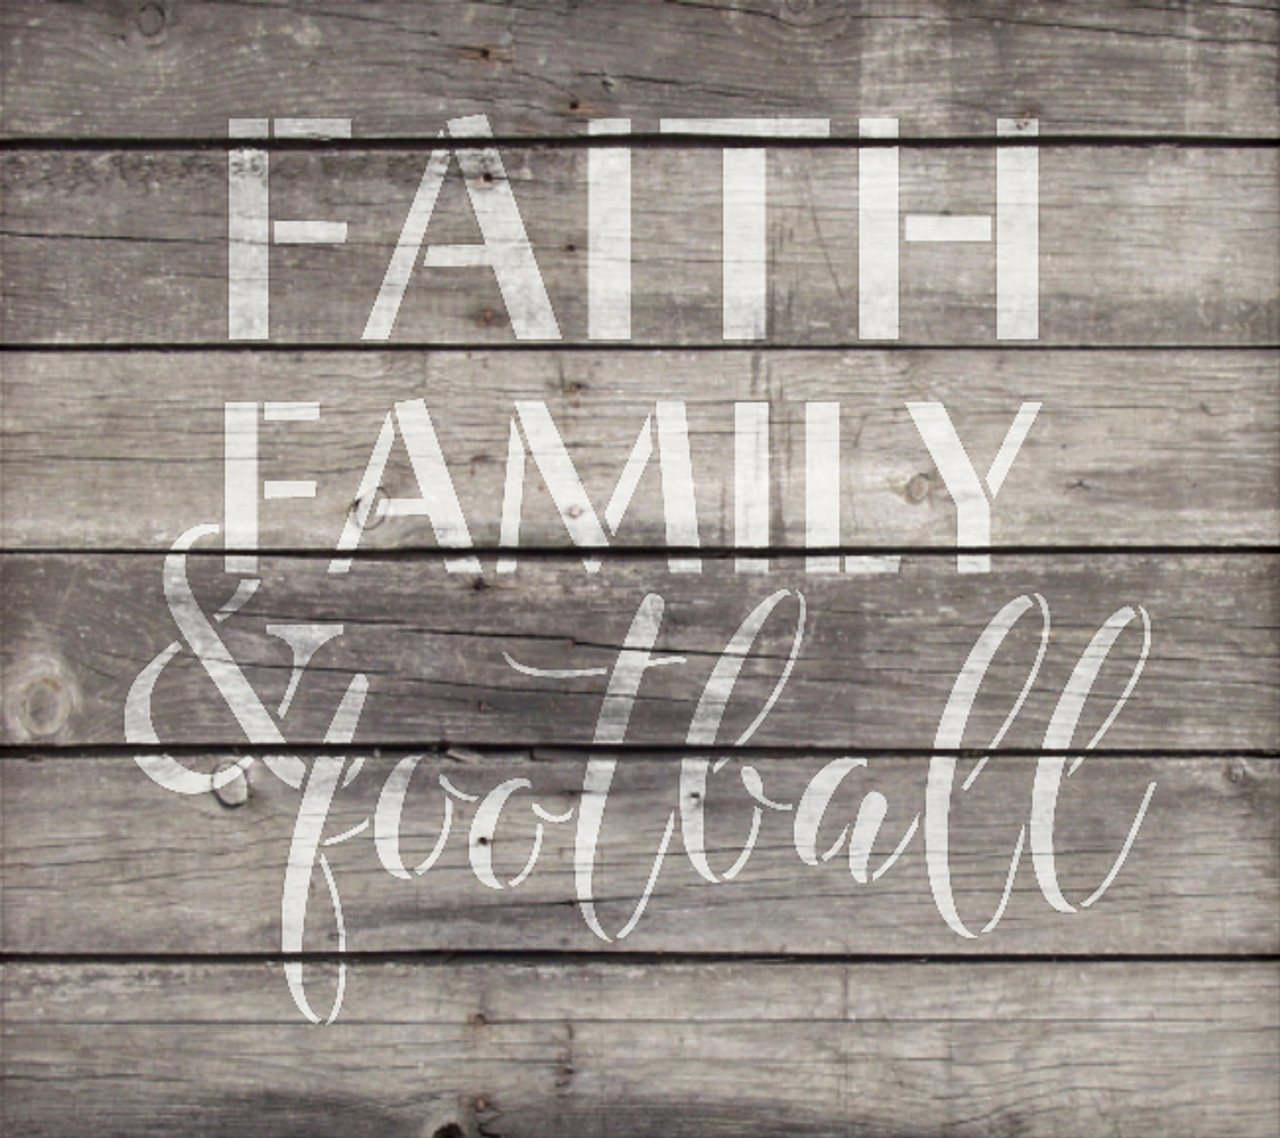 Faith Family & Football Stencil by StudioR12 -  Fall Sports Word Art - 16" x 15" - STCL2313_3